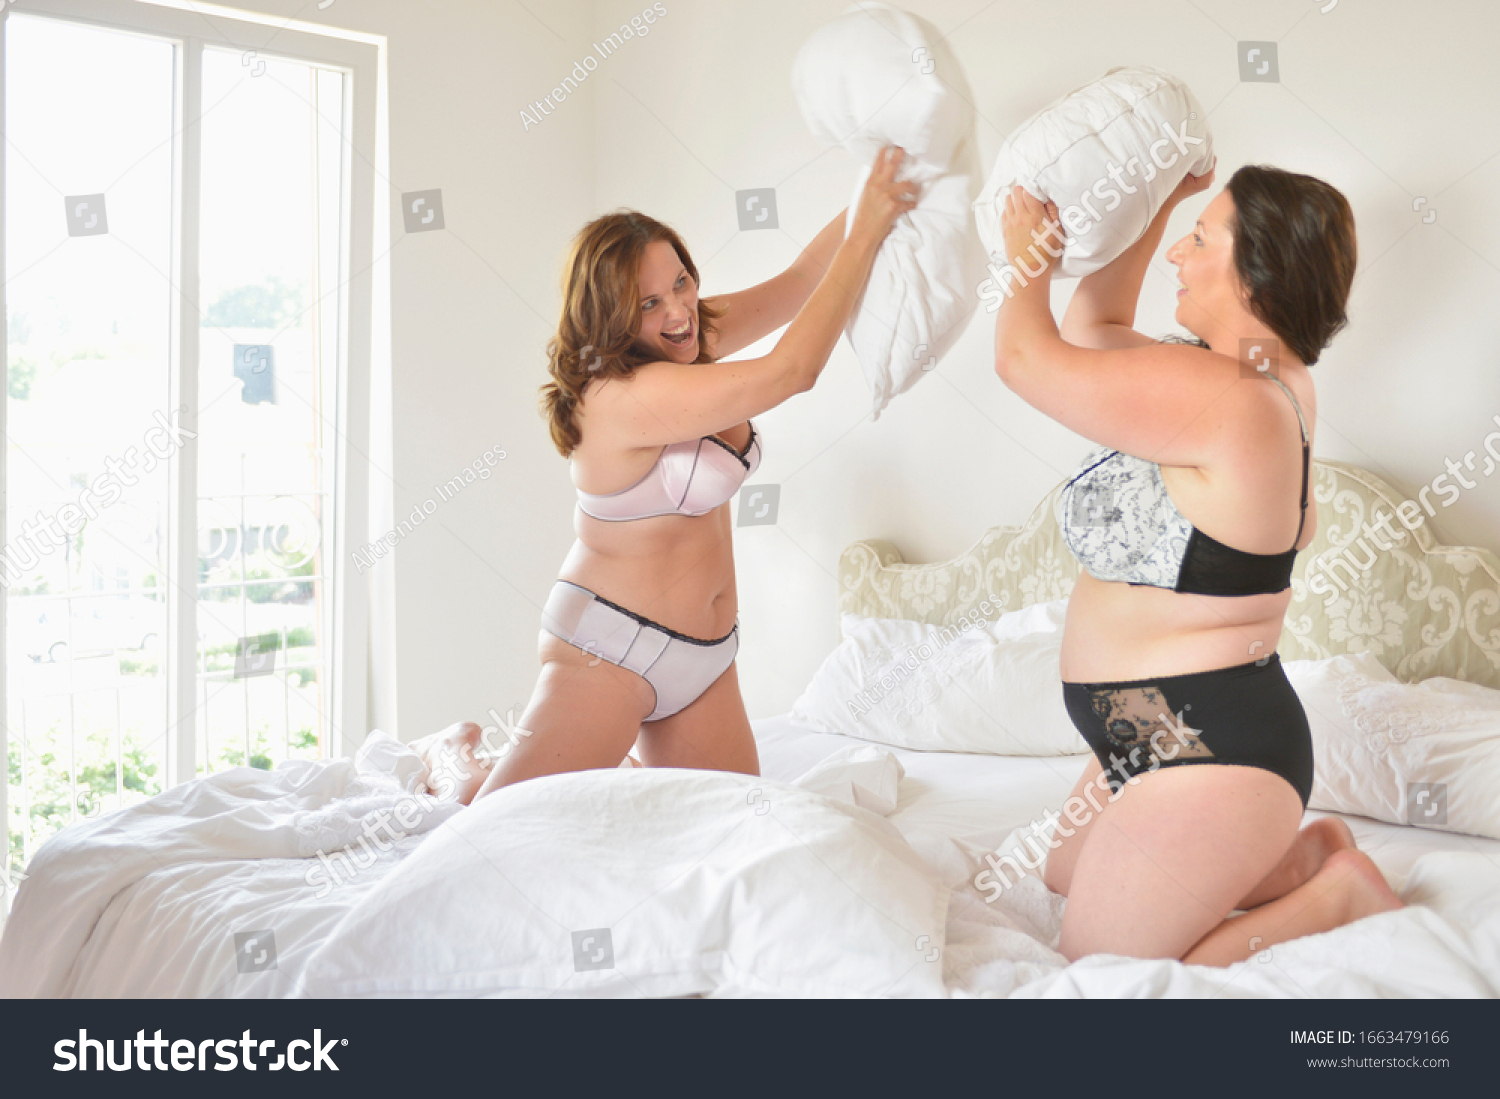 stock-photo-mid-adult-women-in-lingerie-on-bed-having-pillow-fight-1663479166.jpg